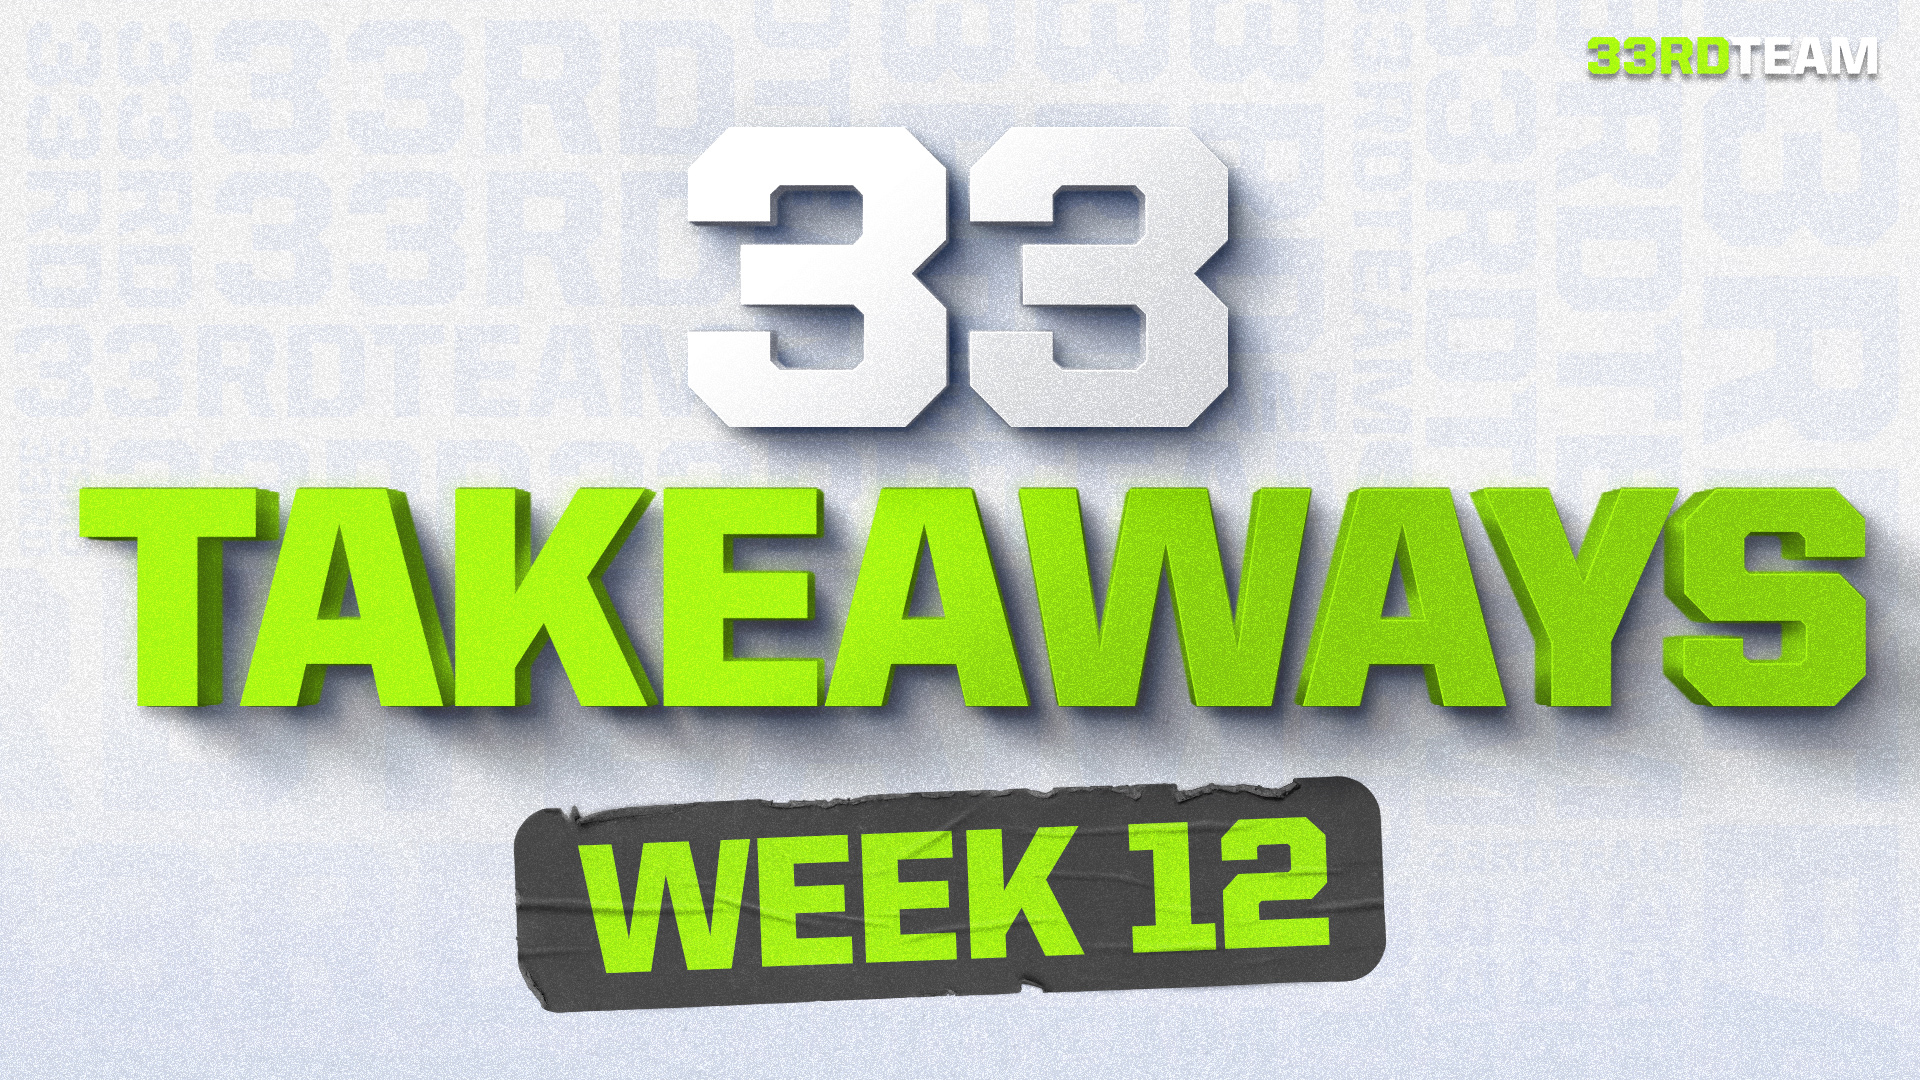 What We Learned: 33 Expert Takeaways From Week 12